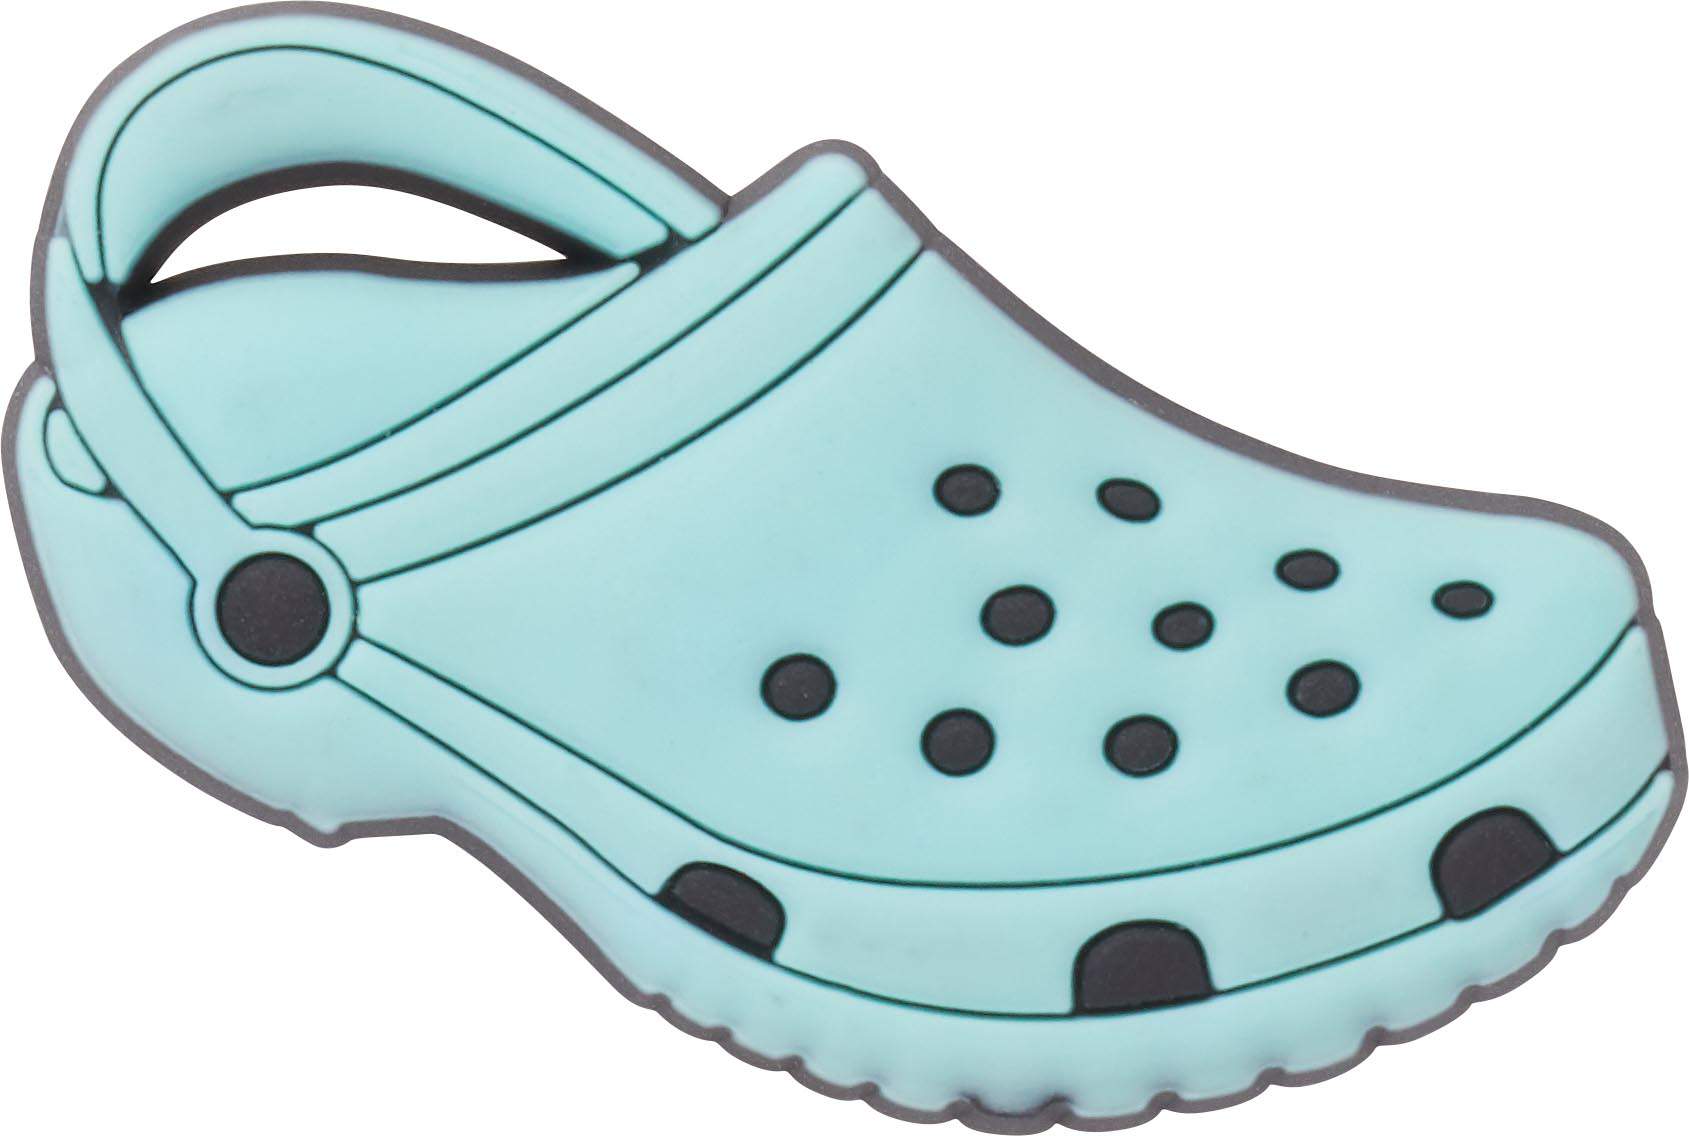 crocs ice blue size 8